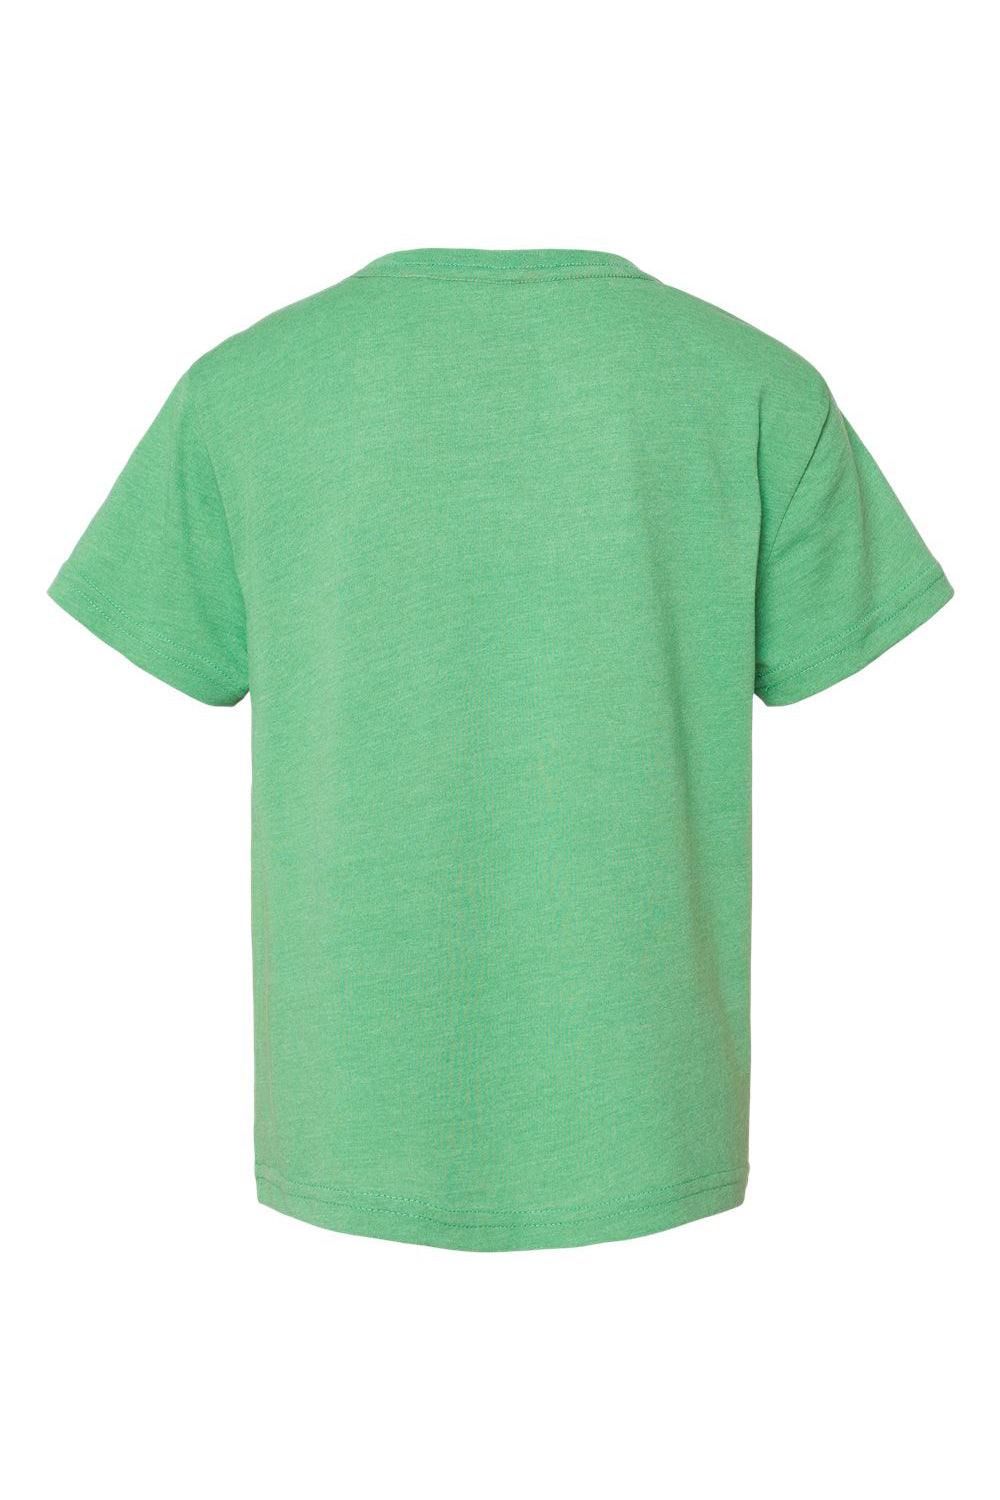 Kastlfel 2015 Youth RecycledSoft Short Sleeve Crewneck T-Shirt Green Flat Back